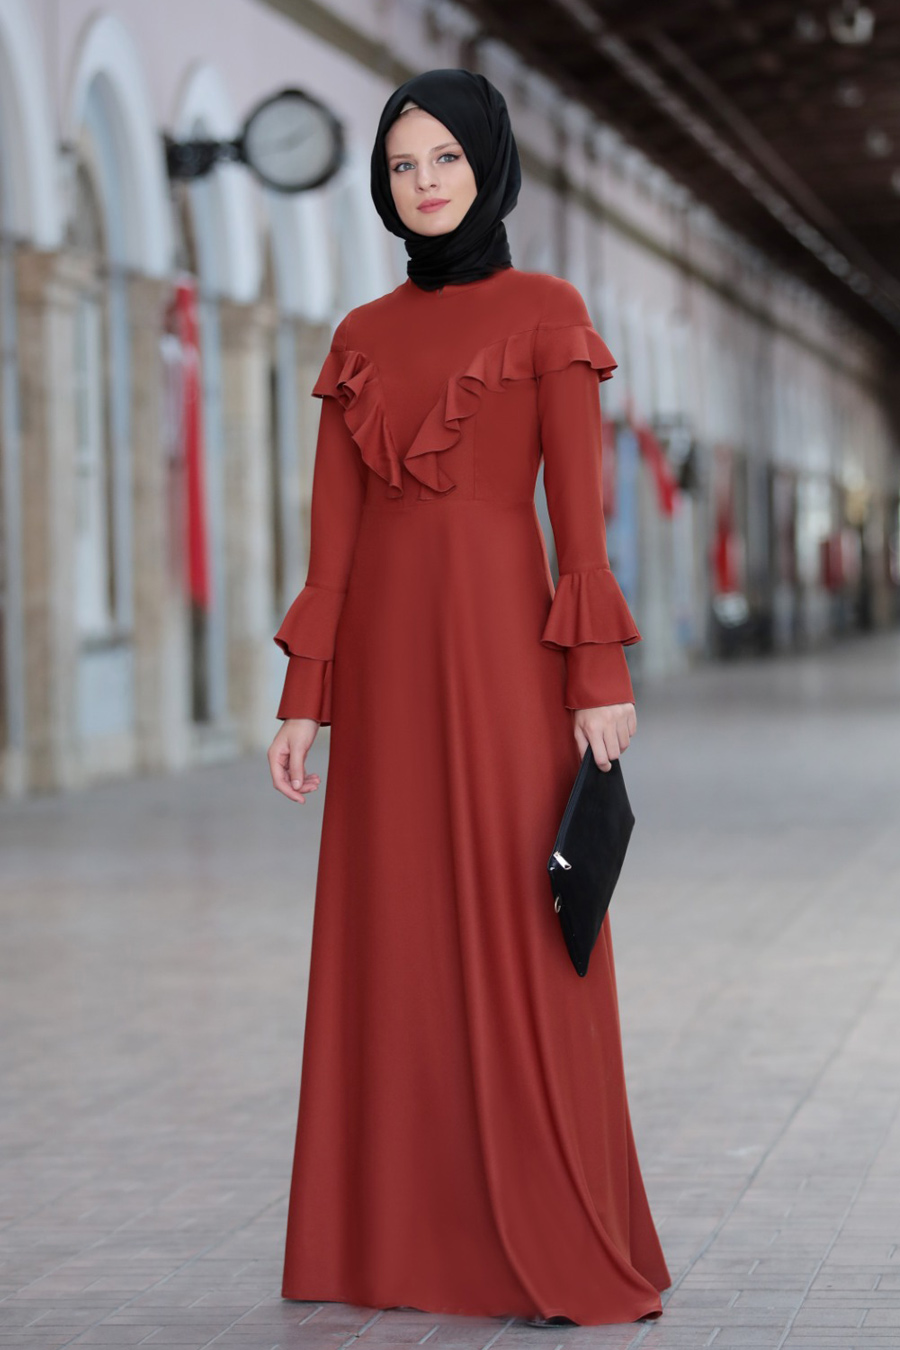 brick red color dress